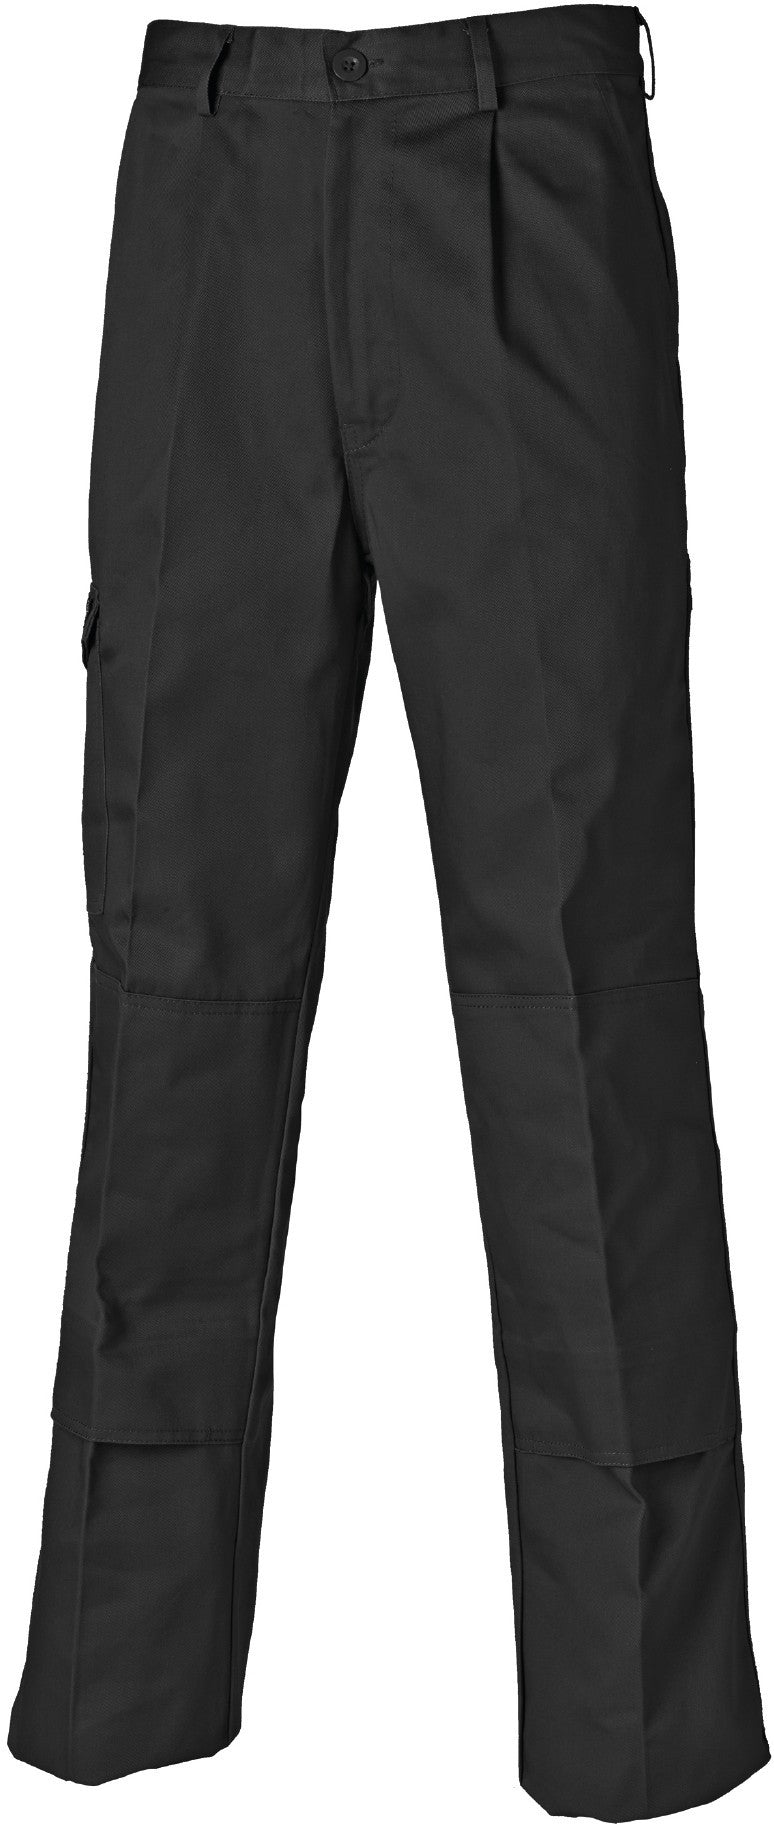 Dickies Redhawk Super WD884 Knee Pad Pockets Trousers